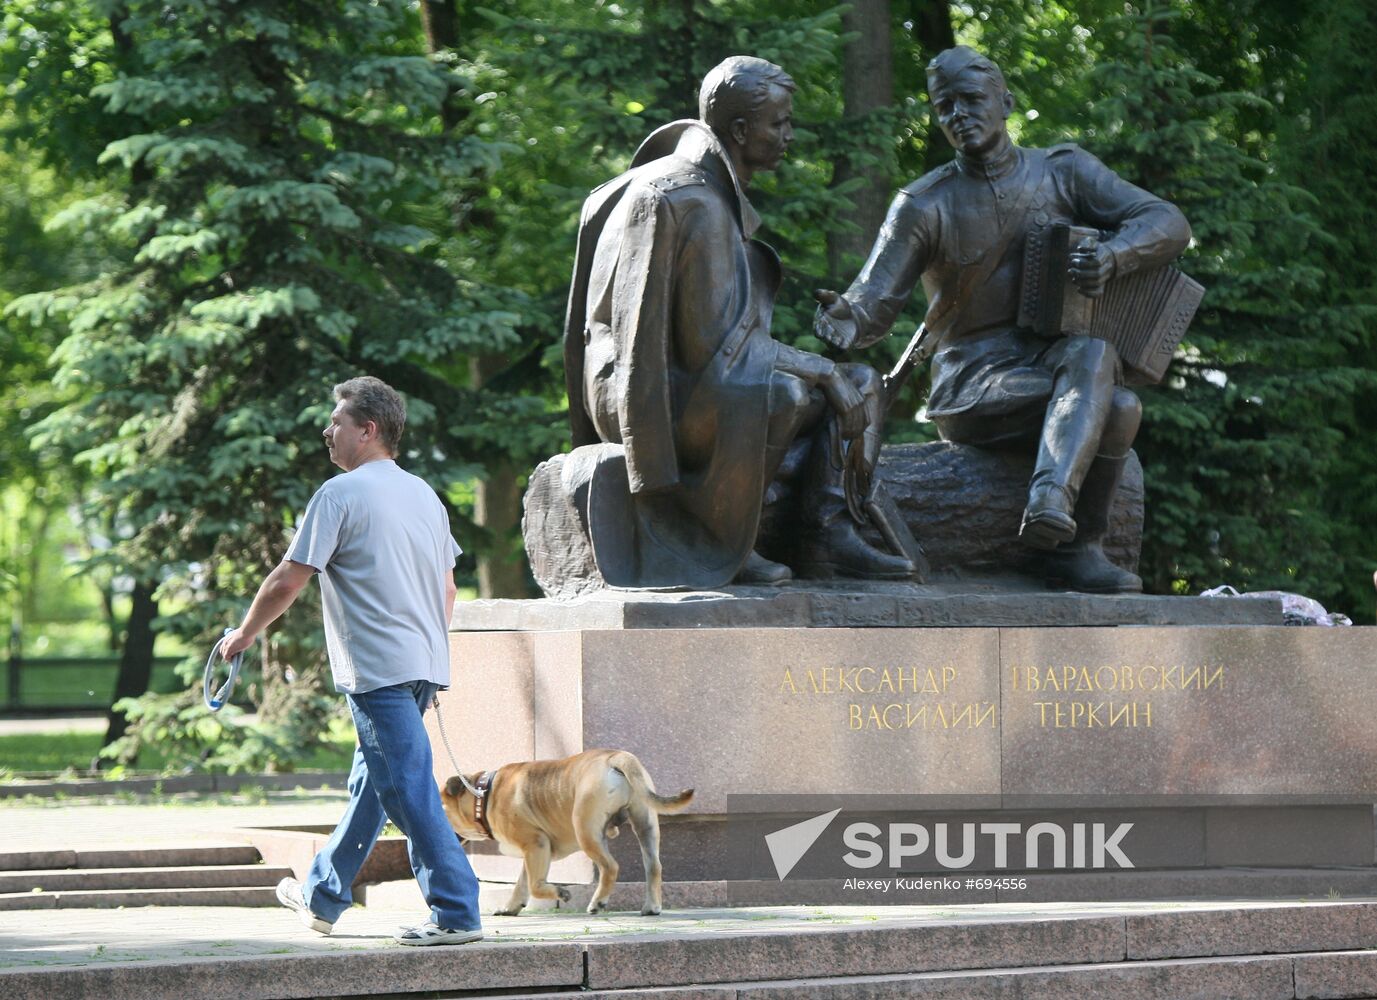 Statue of Alexander Tvardovsky and Vasily Terkin